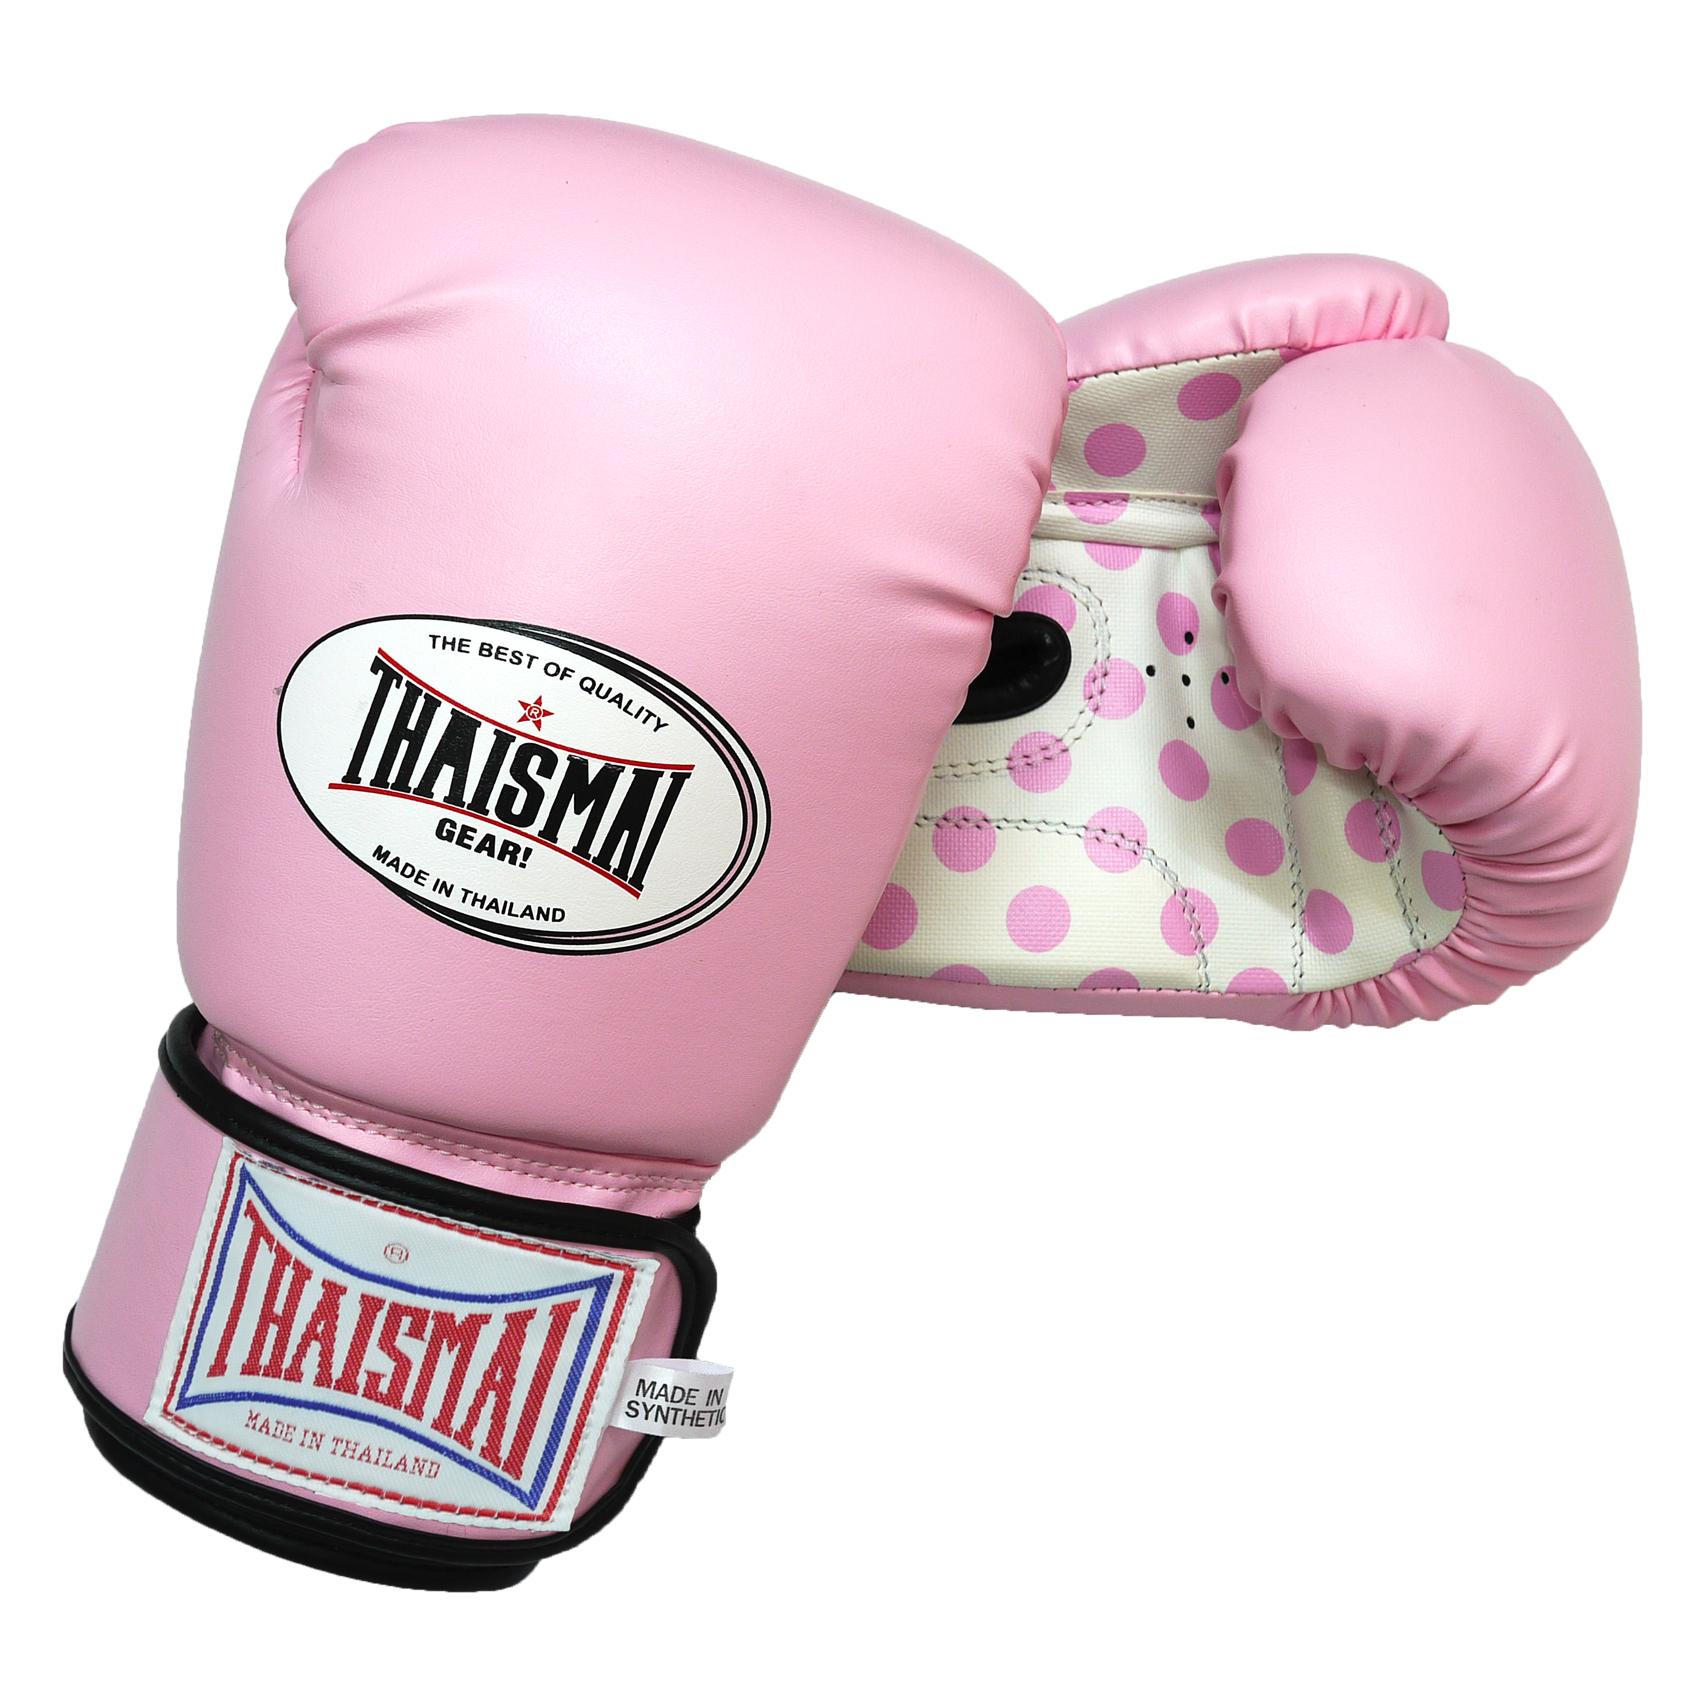 THAISMAI BG124 นวมชกมวย นวมซ้อมมวย นวมต่อยมวย อุปกรณ์มวยไทย นวม หนังเทียม  BG-124 Boxing Gloves PU Special Color Pink/Polkadots THAIFIGHTPRO  color Pink/Dotssize 12 OZ